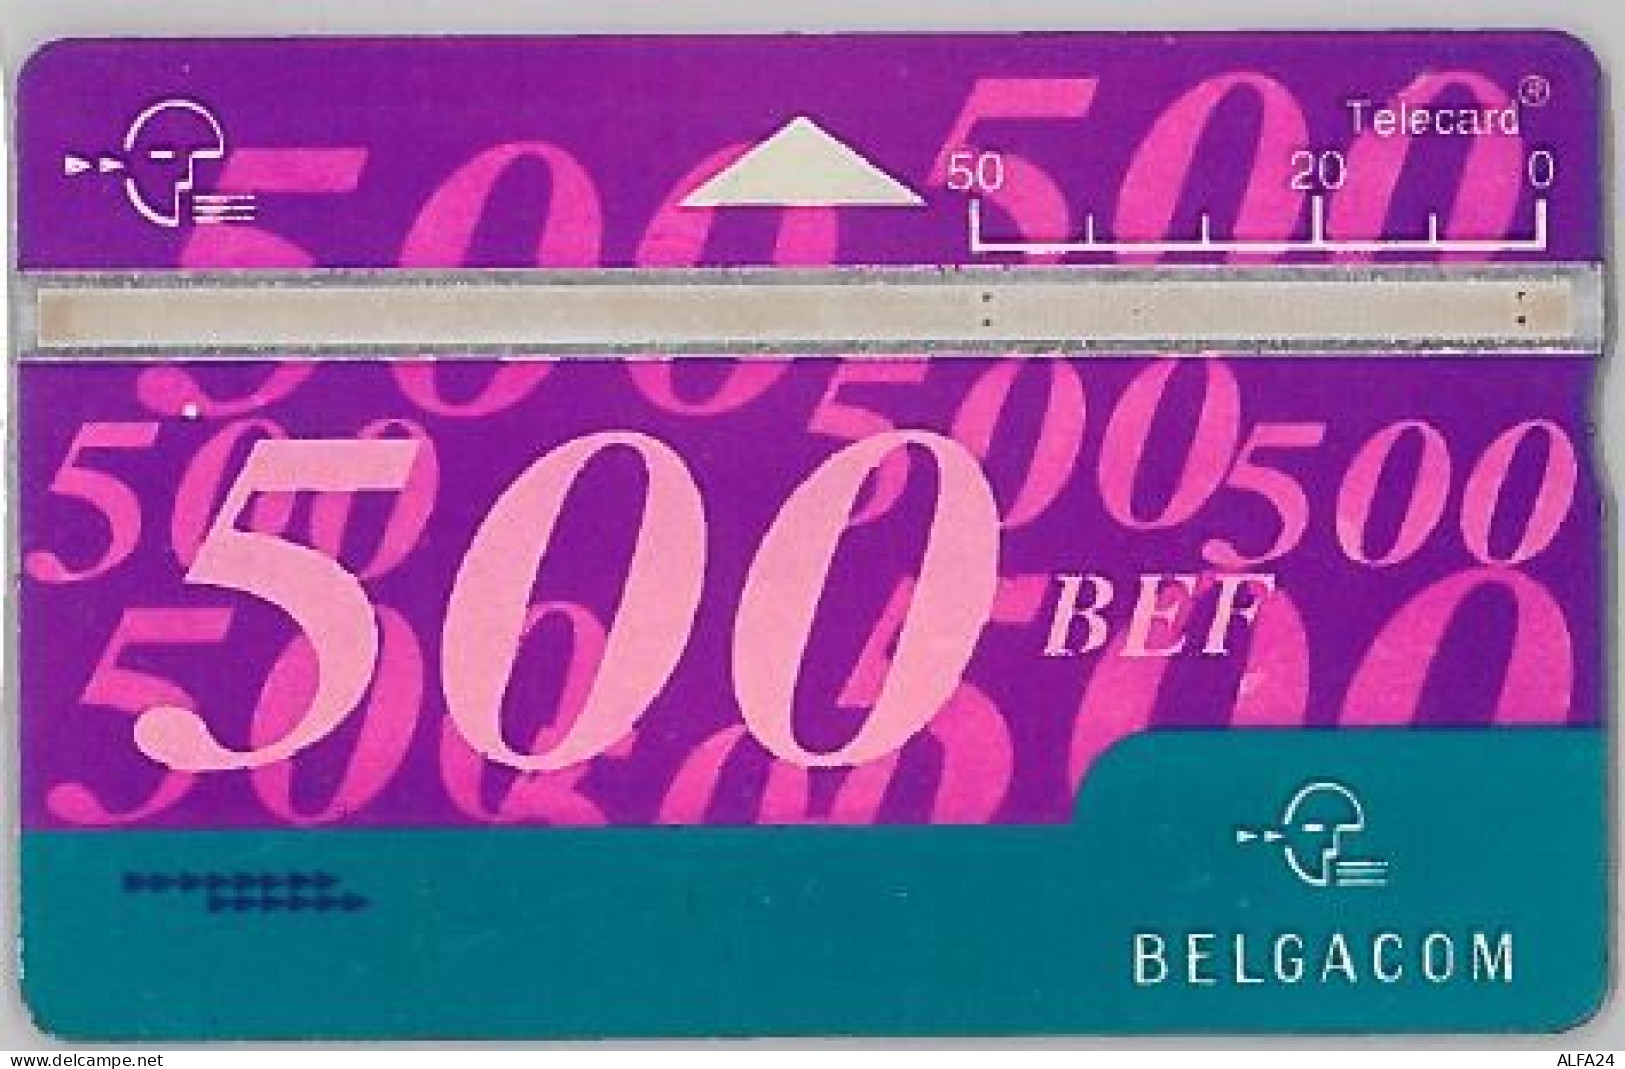 PHONE CARD - BELGIO (H.8.1 - Senza Chip